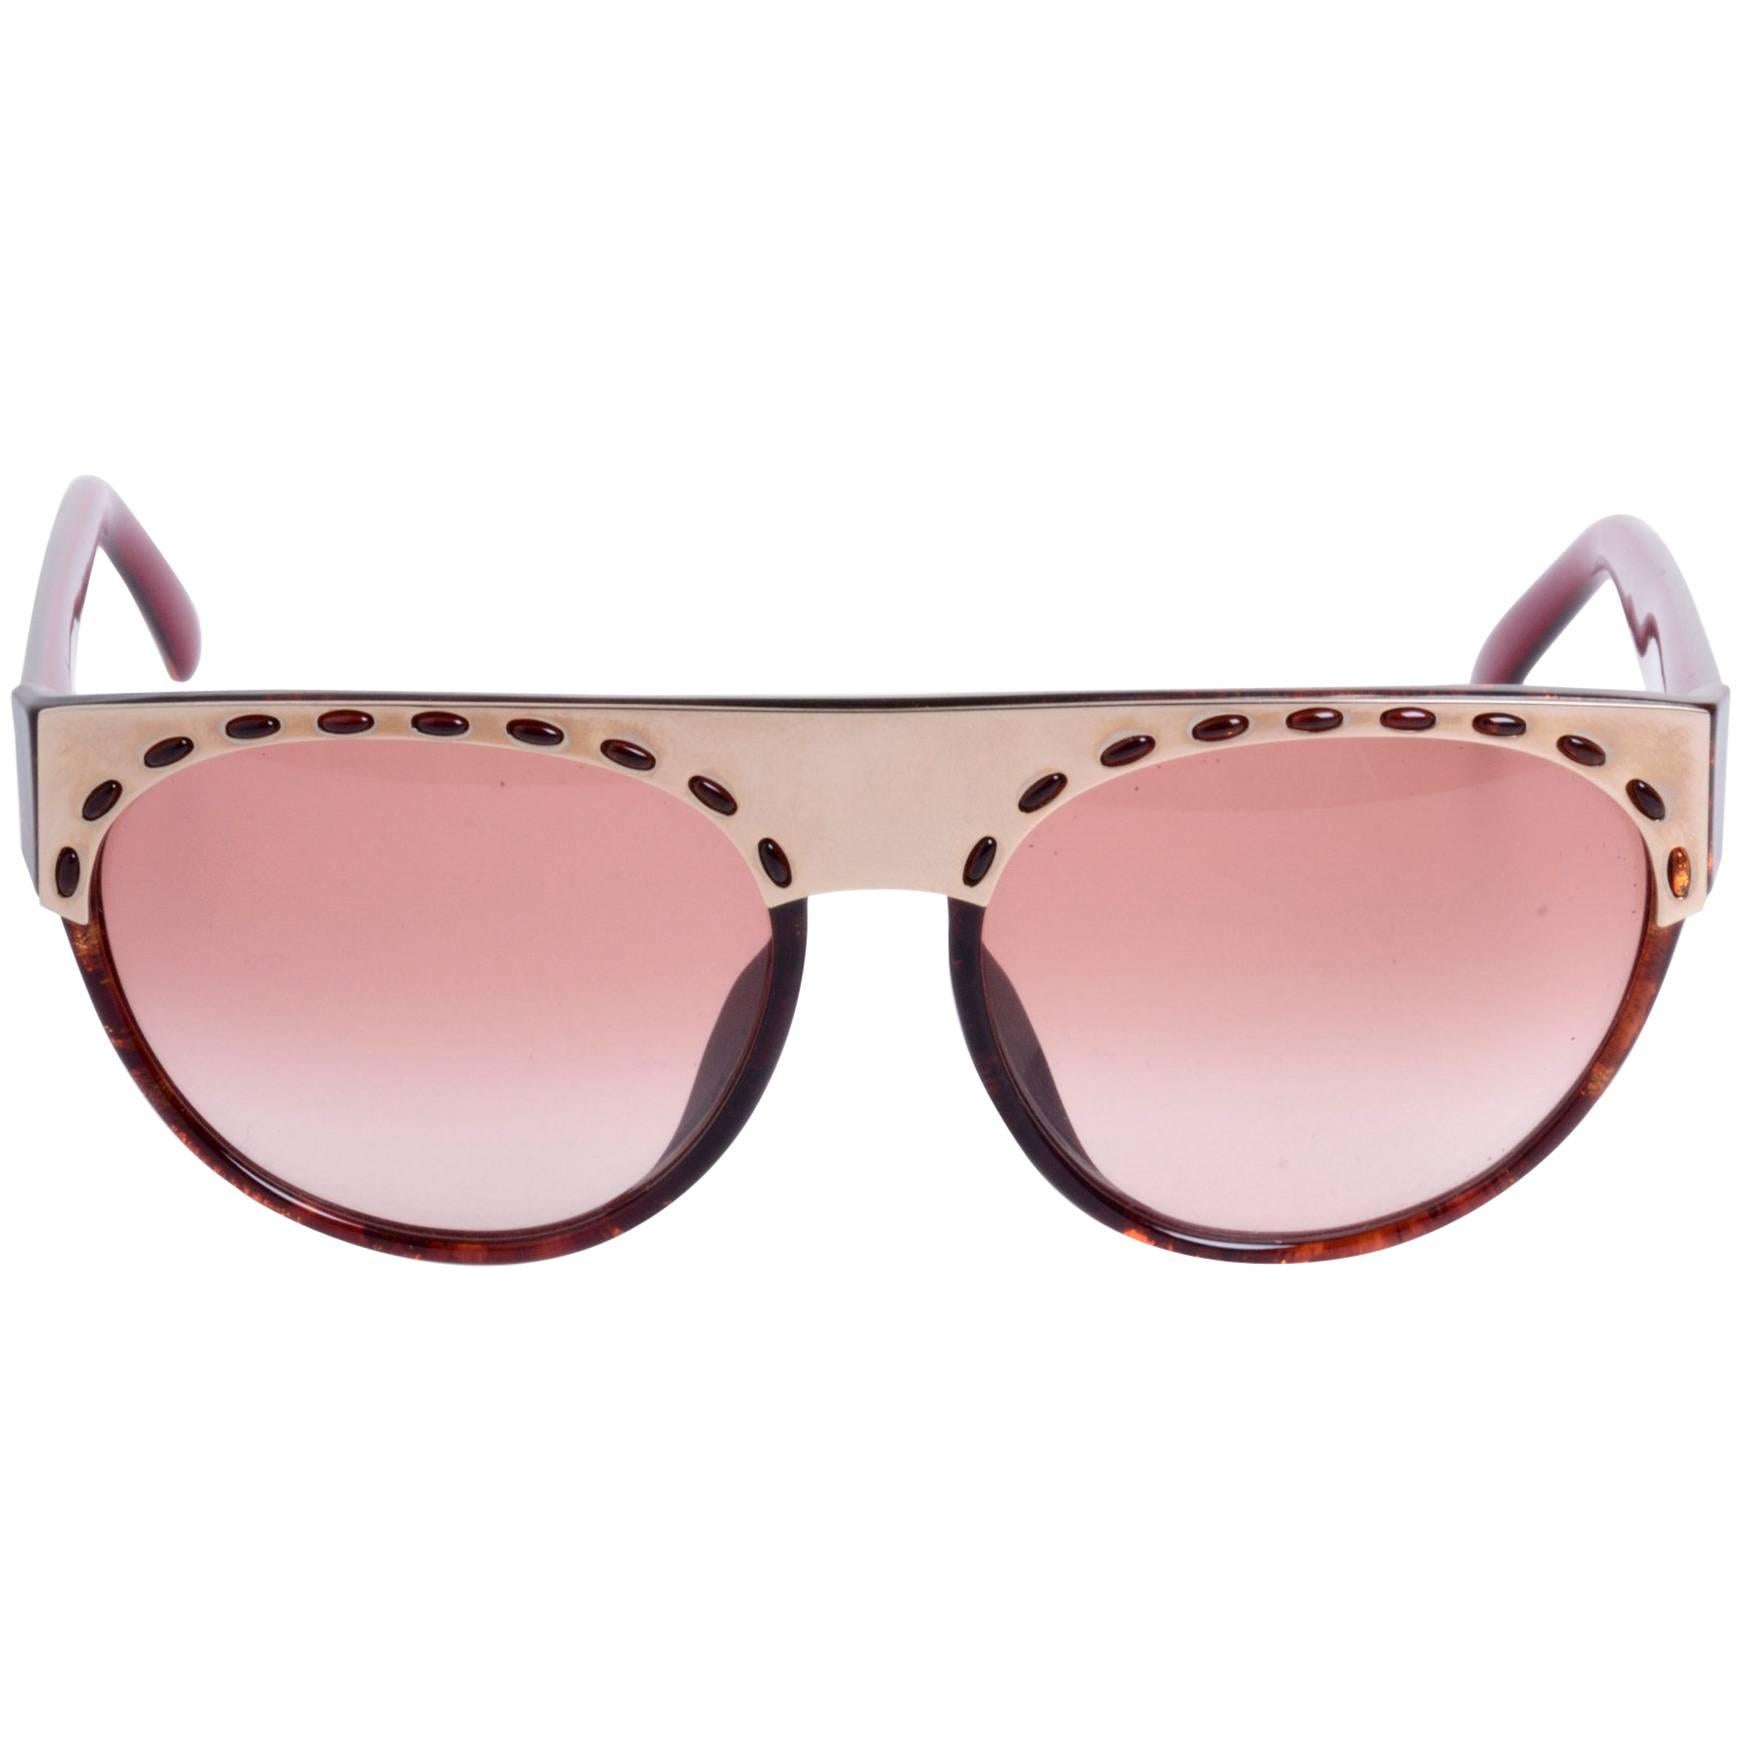 1980s Christian Dior Sunglasses For Sale